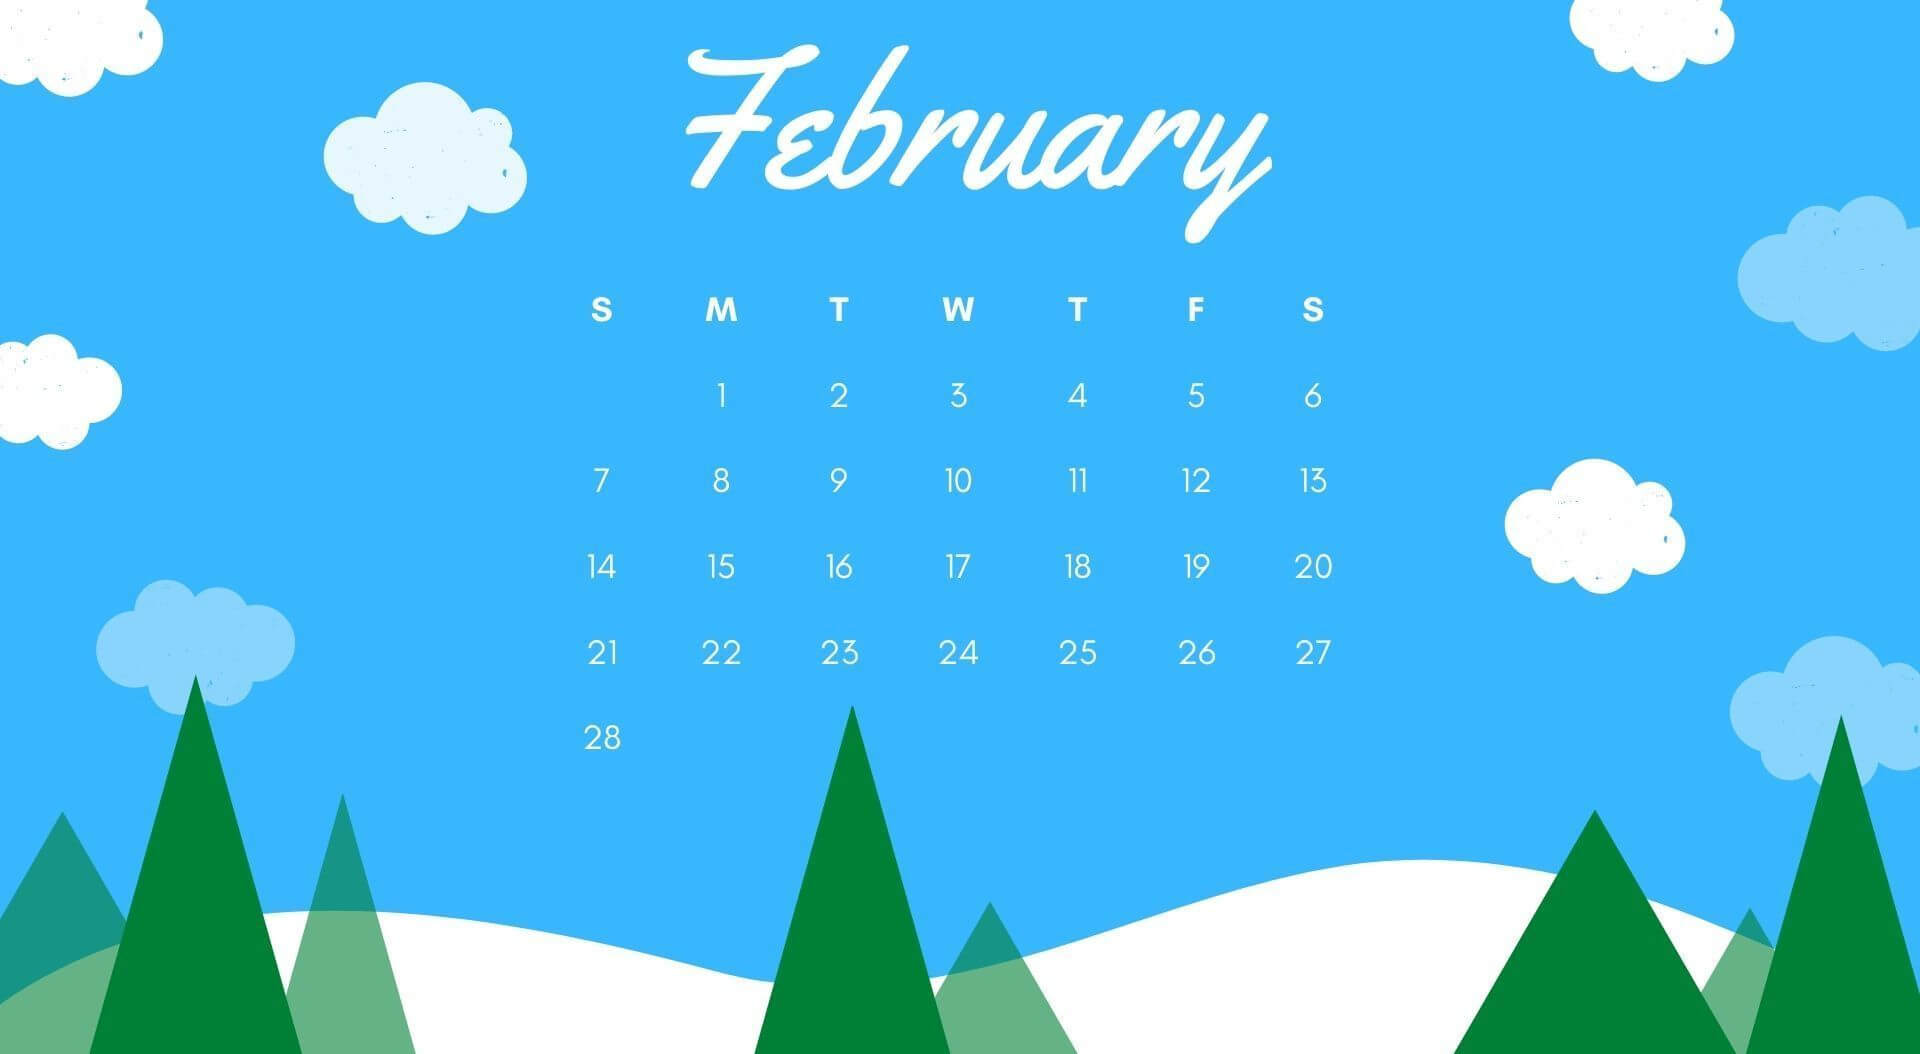 February 2021 Calendar Wallpaper